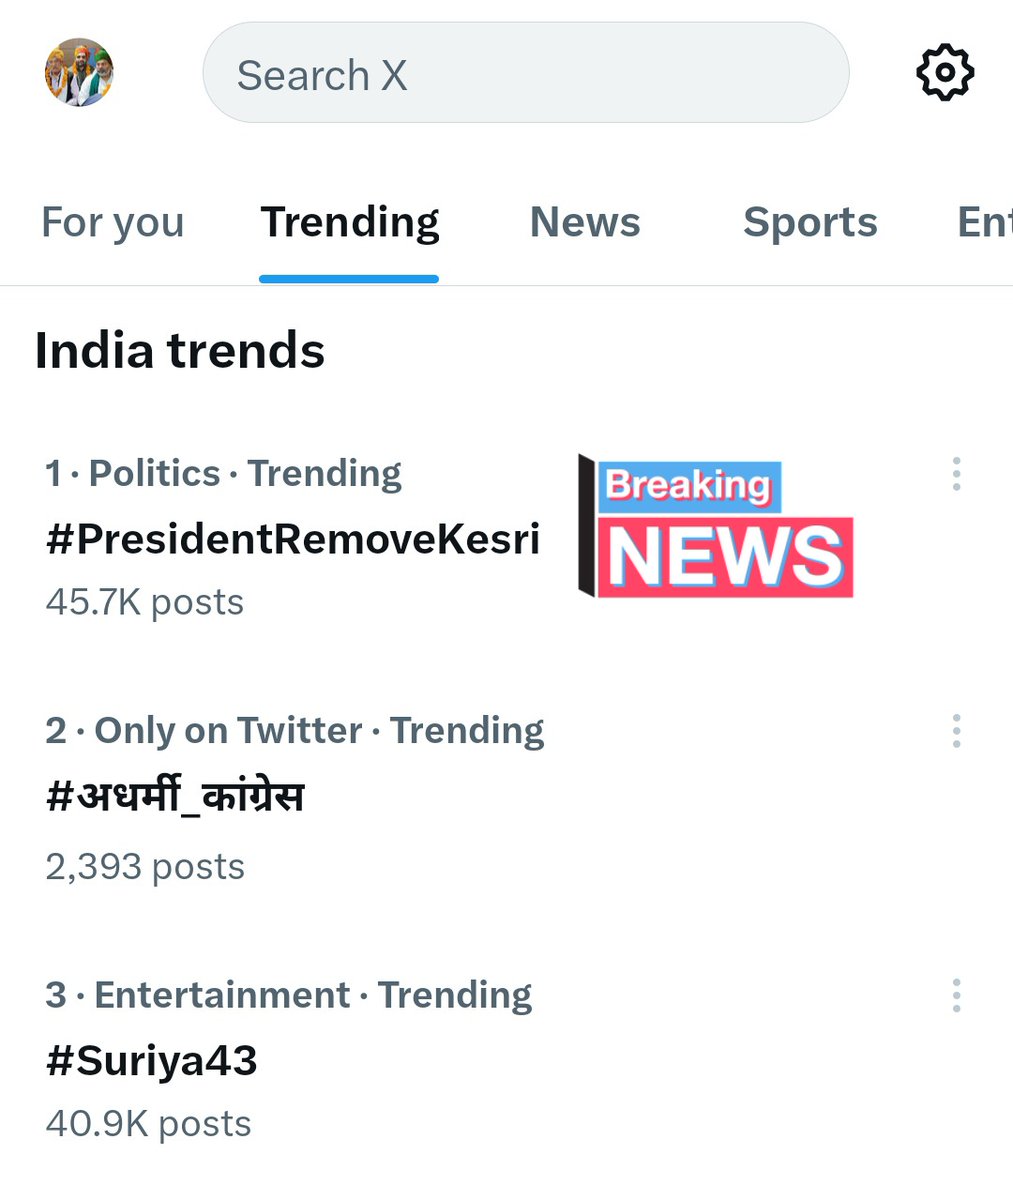 Top Trending ✊✊
#PresidentRemoveKesri